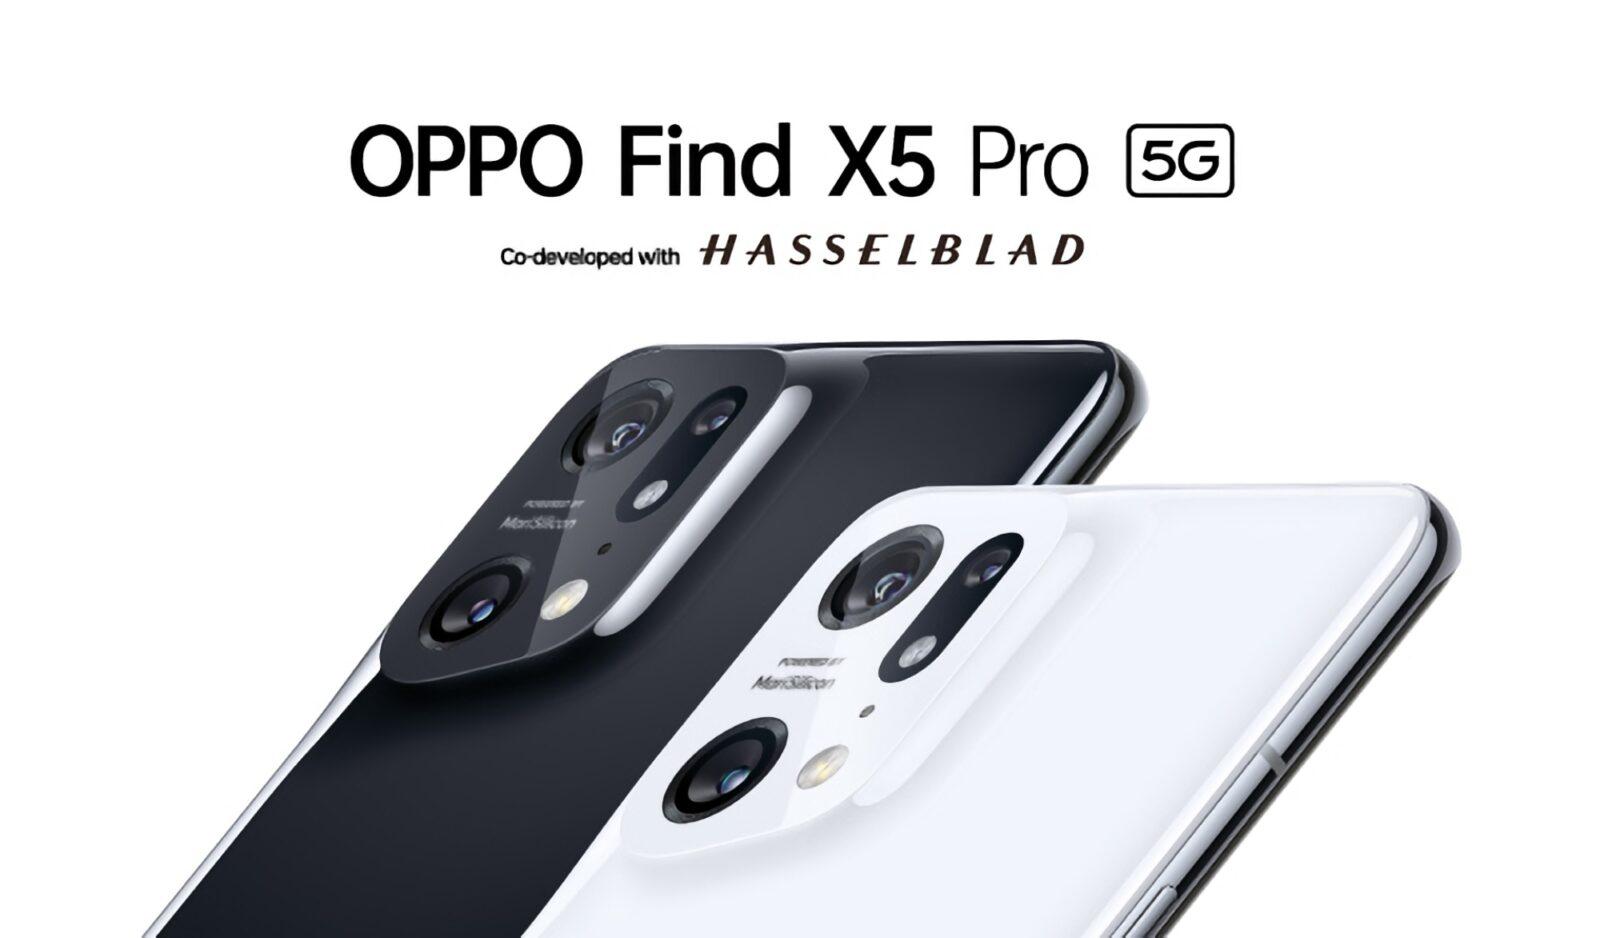 Камеры Oppo Find X5 Pro предложат продвинутую систему стабилизации (OPPO Find X5 Pro render)